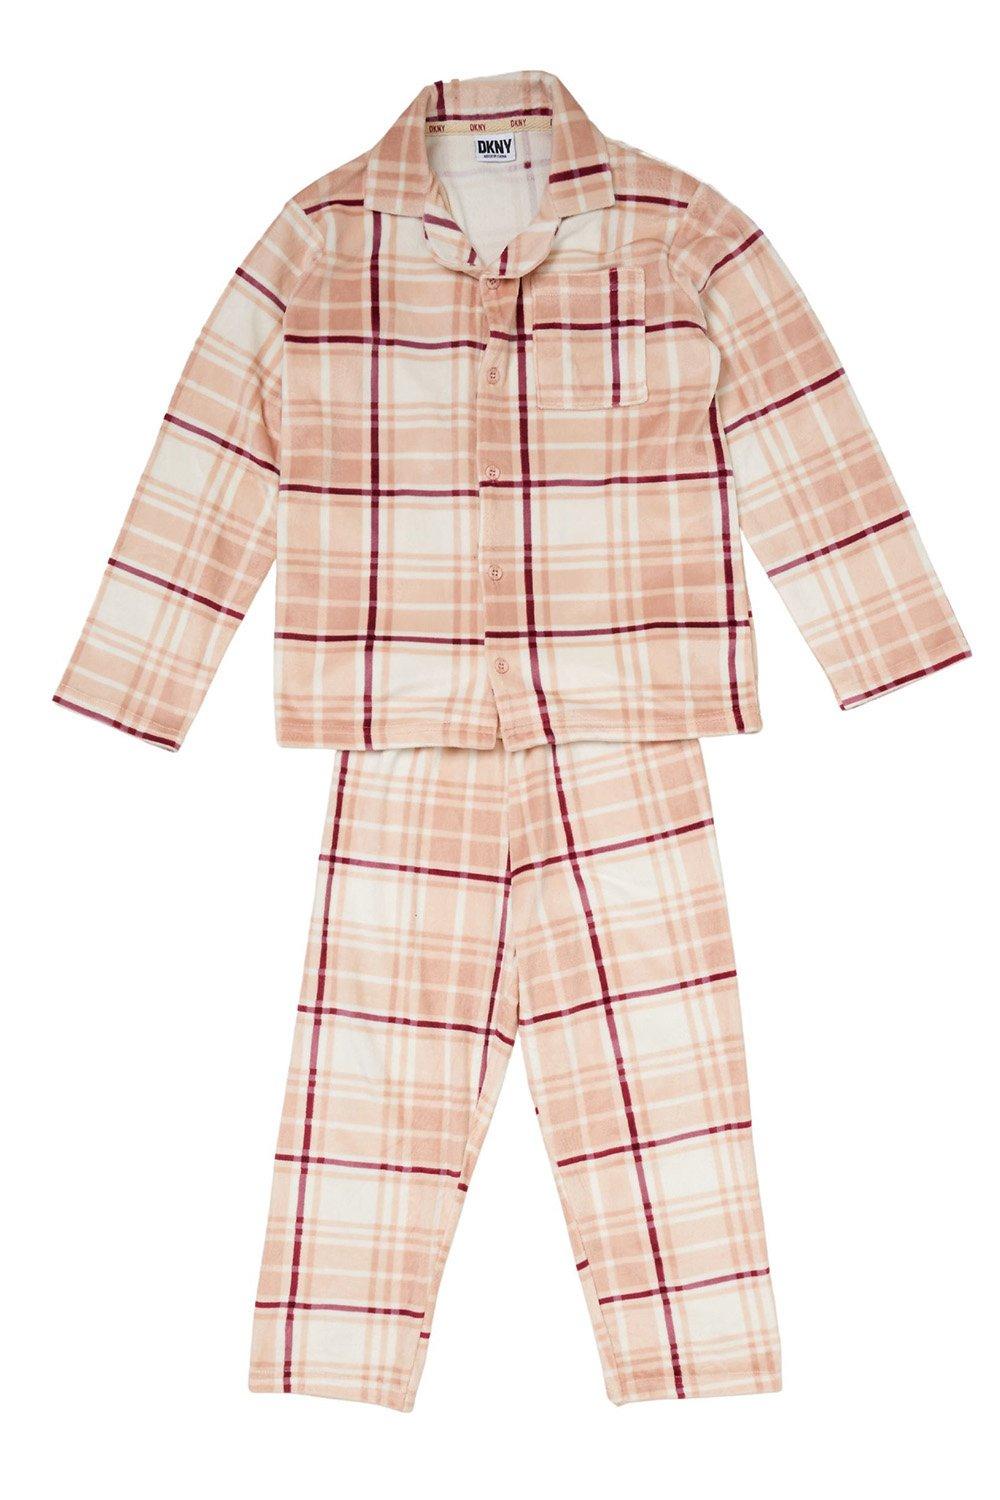 Girls Minky Pyjama Set Dusky Pink Plaid Shirt Bottoms Toddler Child Age 2-7 years